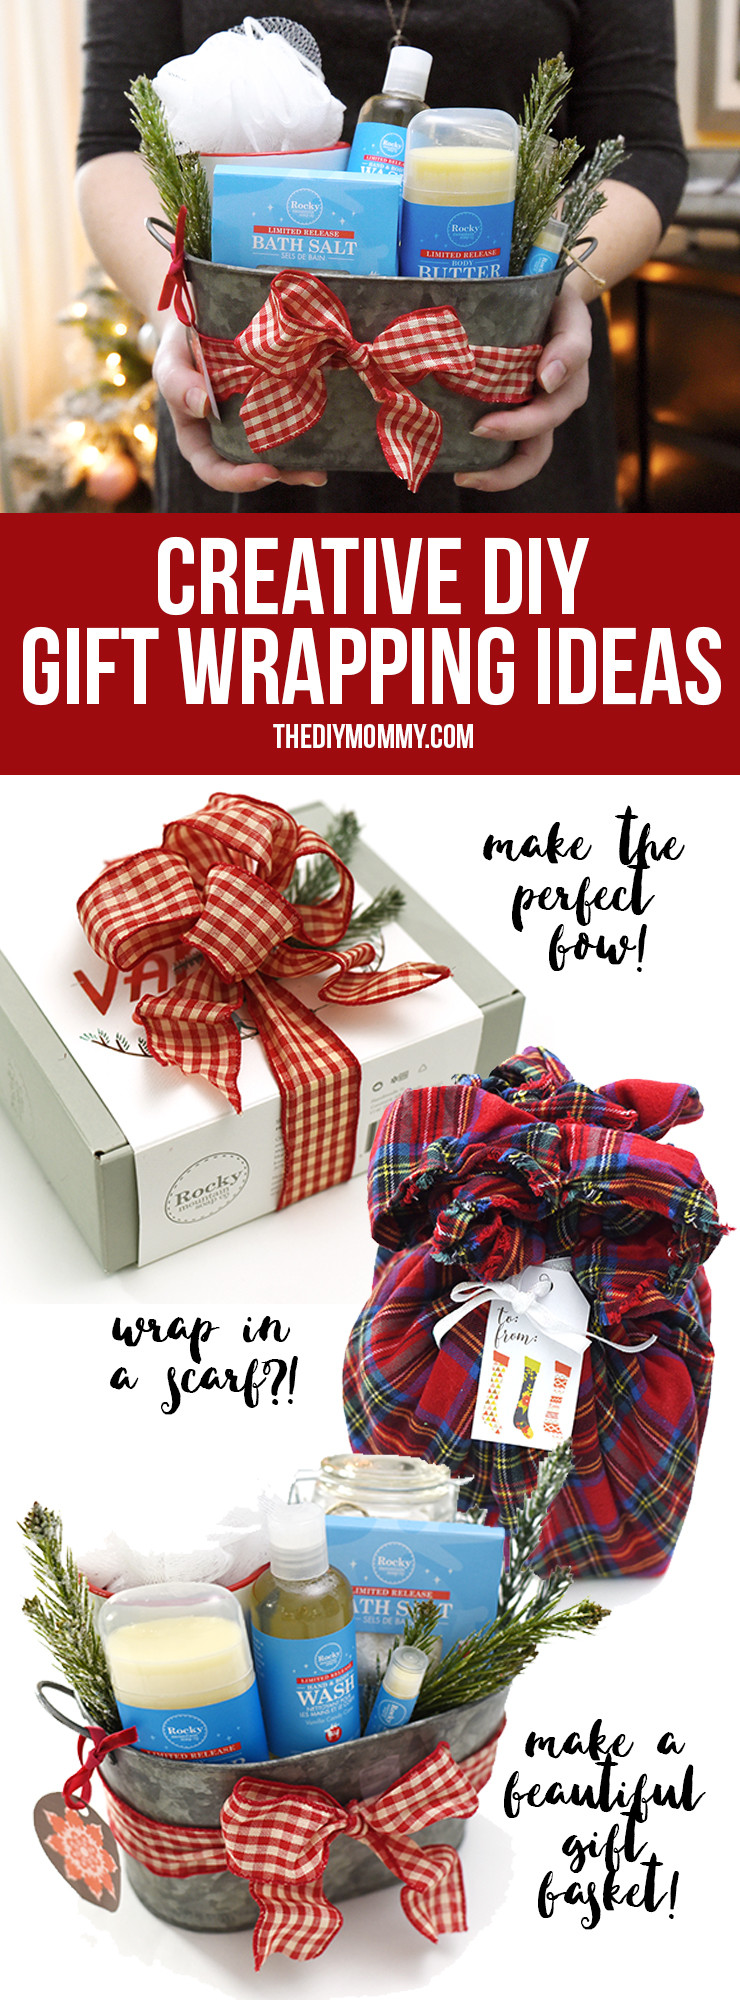 Creative Christmas Gift Ideas
 Creative DIY Gift Wrapping Ideas